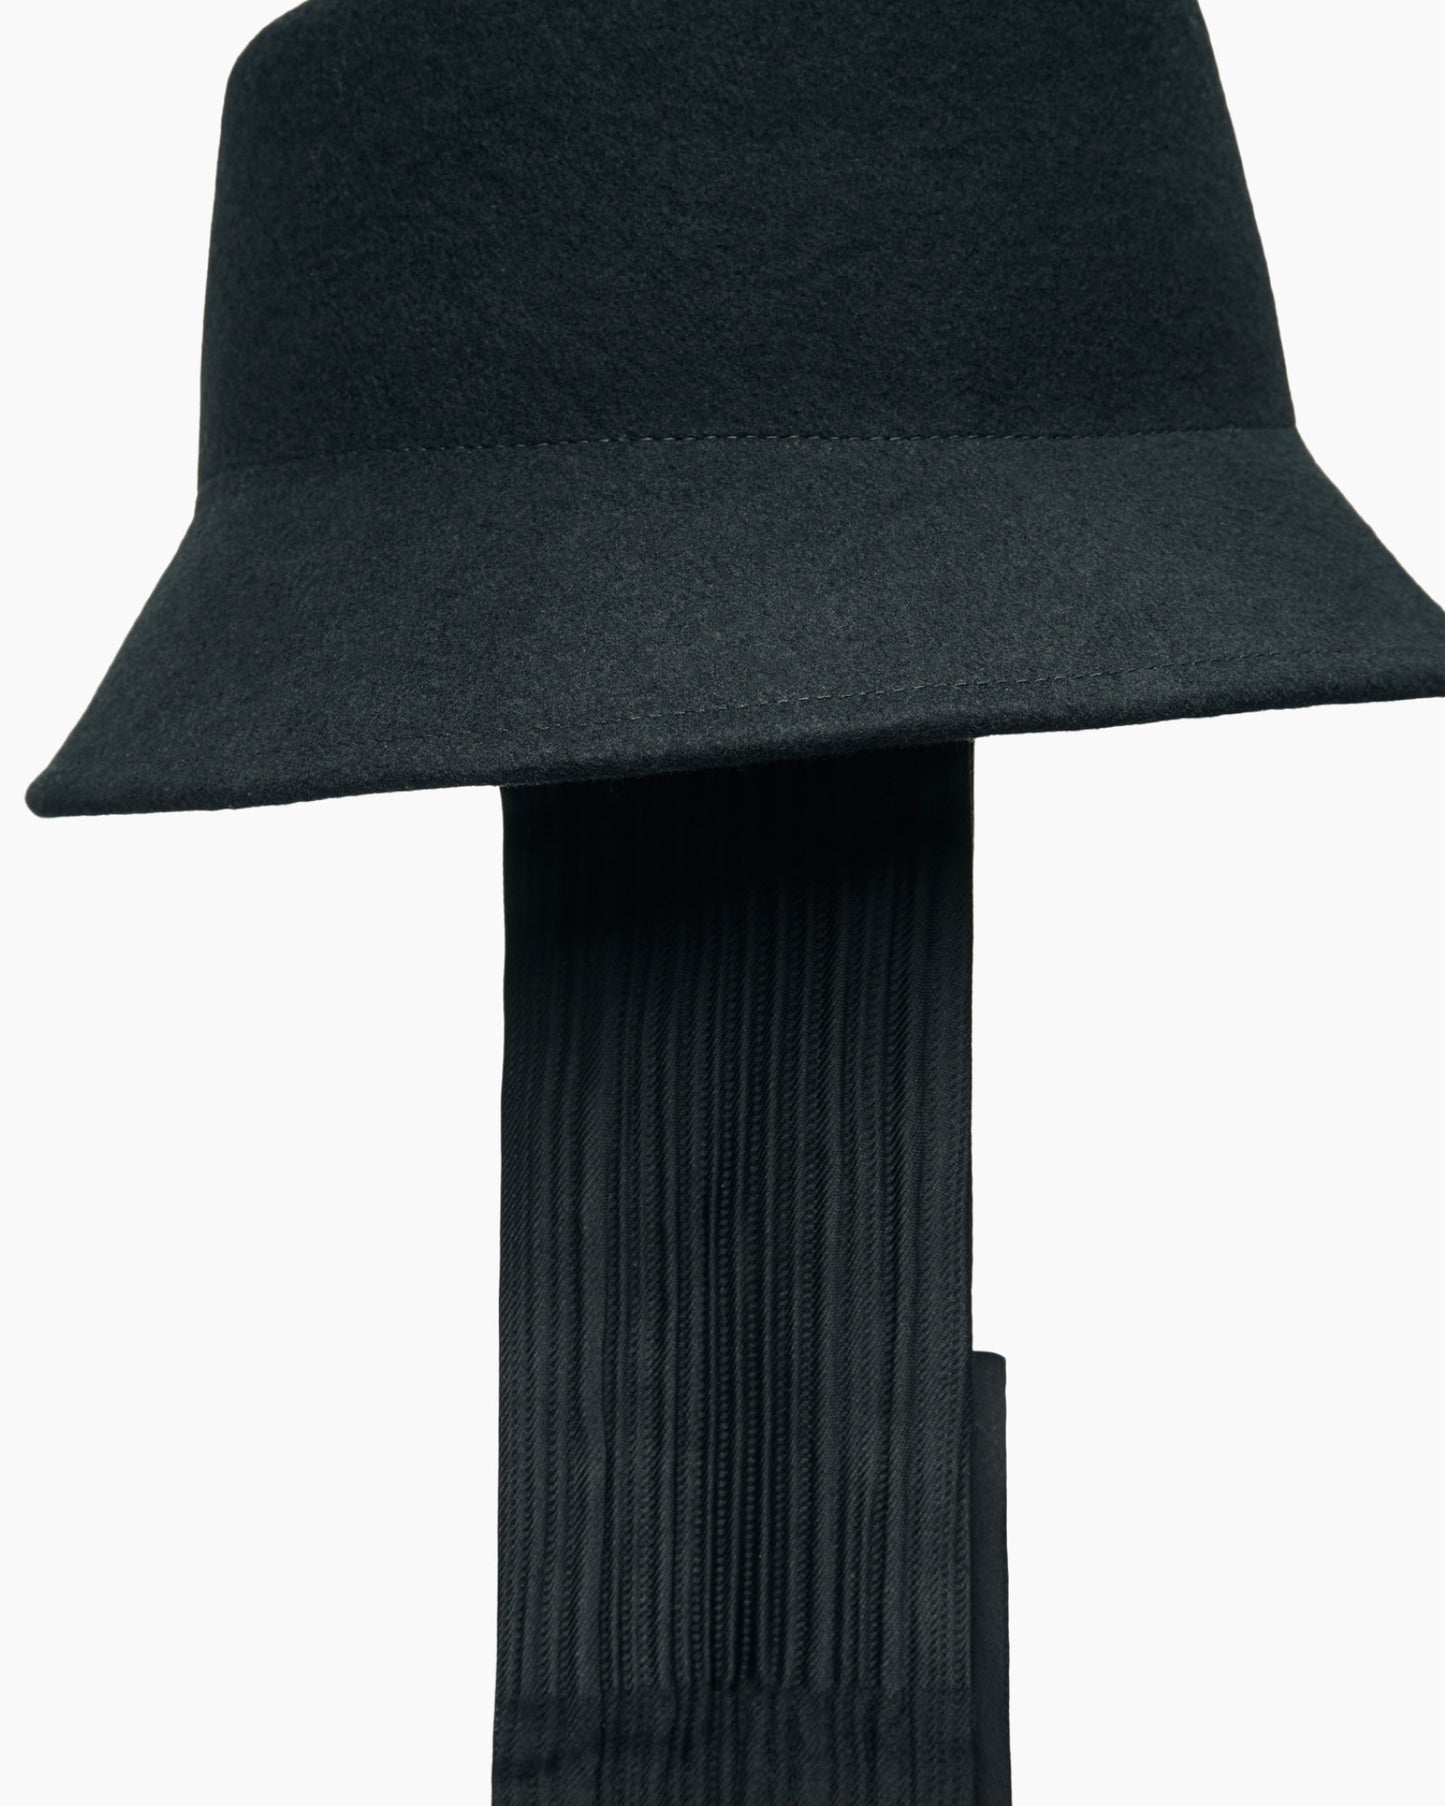 Narrow-brimmed hat